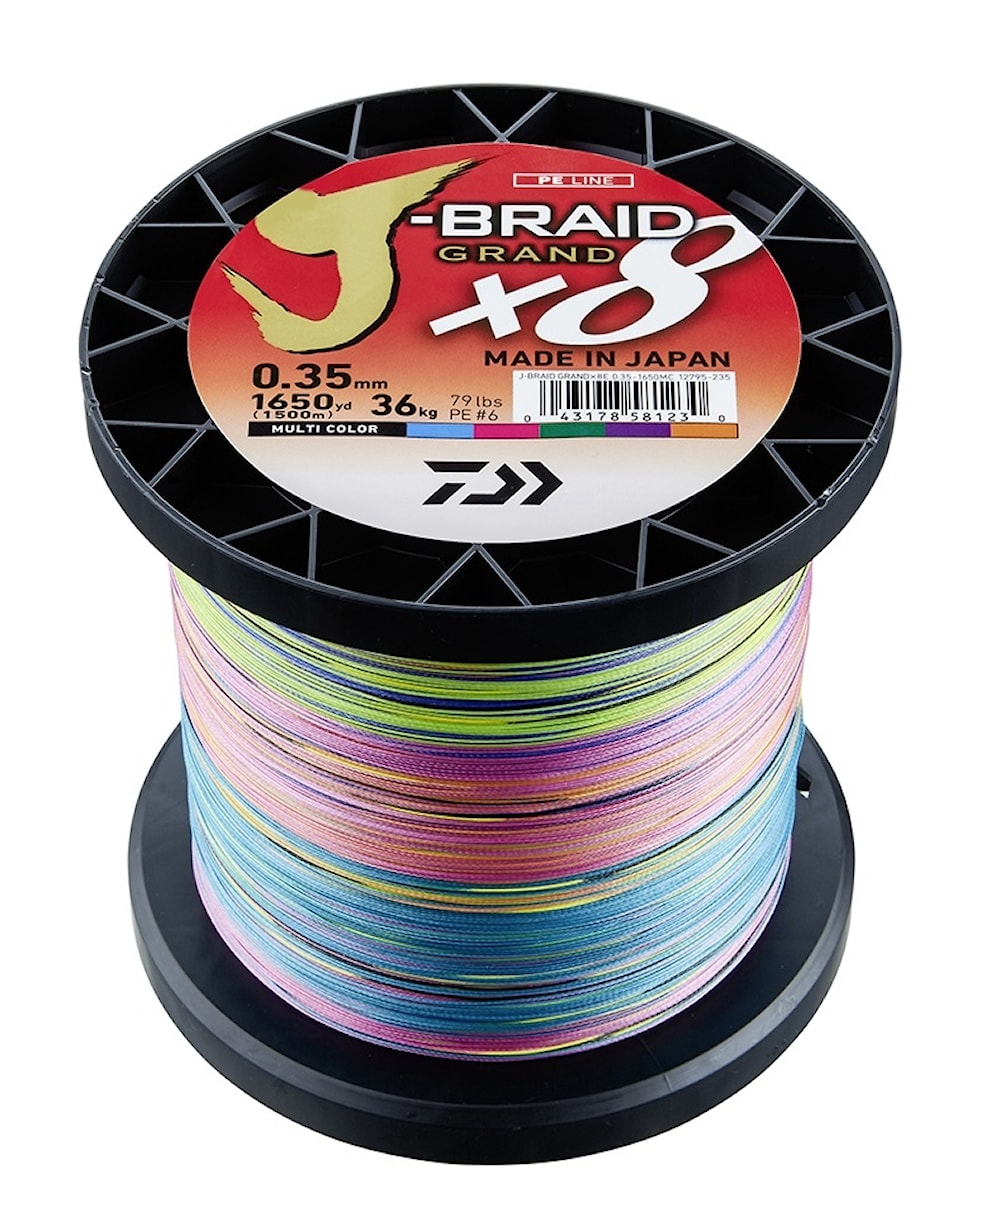 Daiwa J-Braid Grand X8-1500m Multi Color Neu 2020 